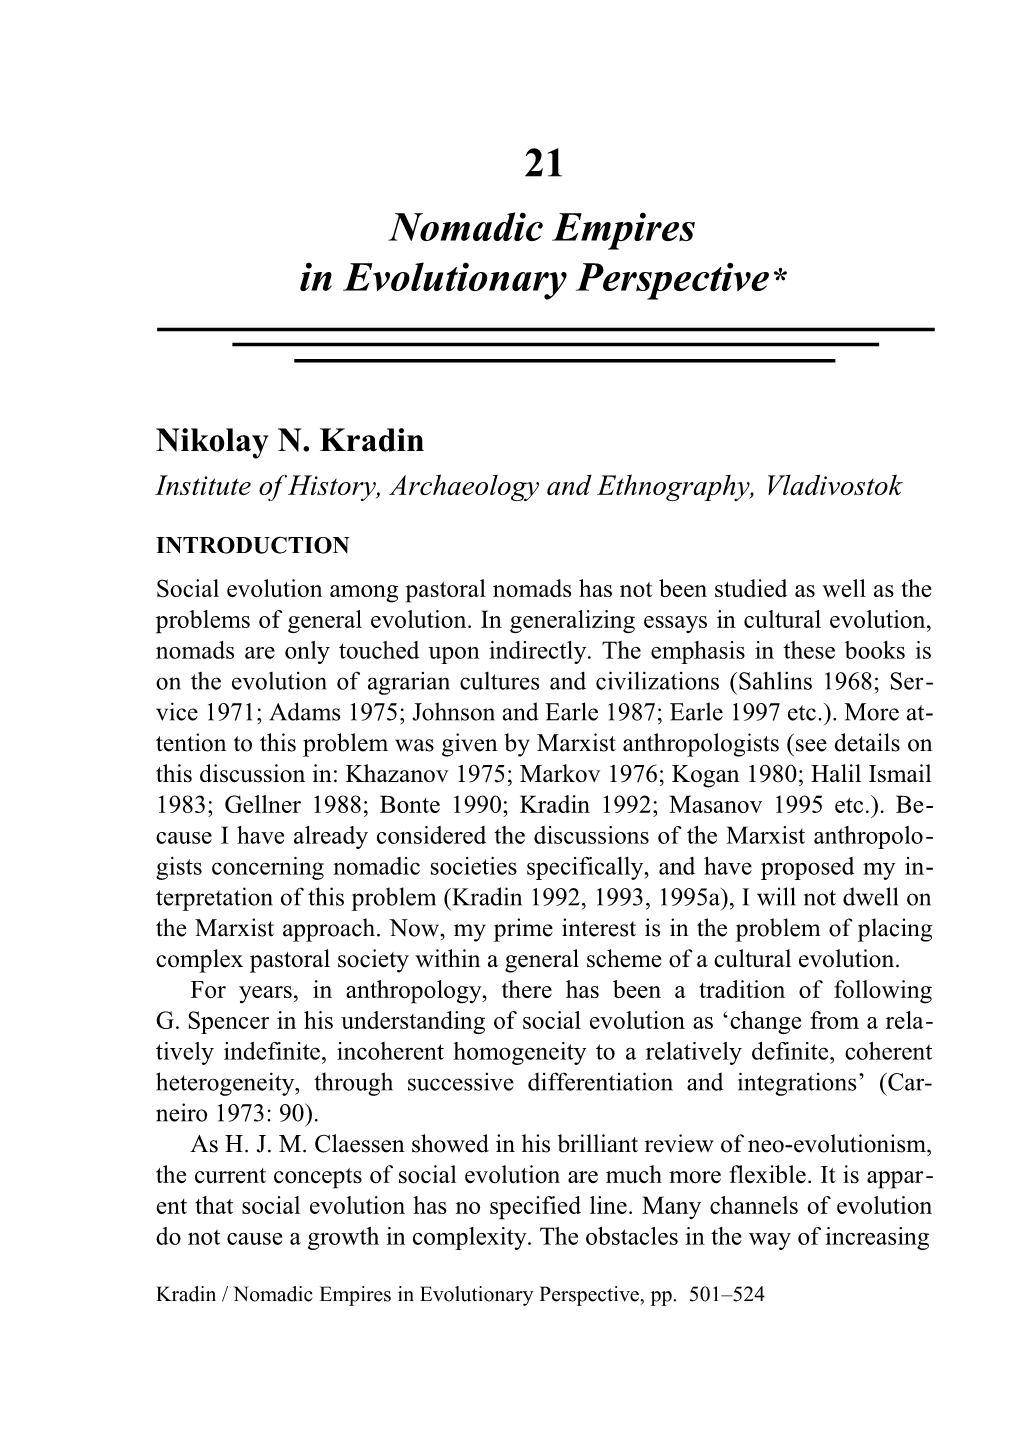 Kradin / Nomadic Empires in Evolutionary Perspective 1